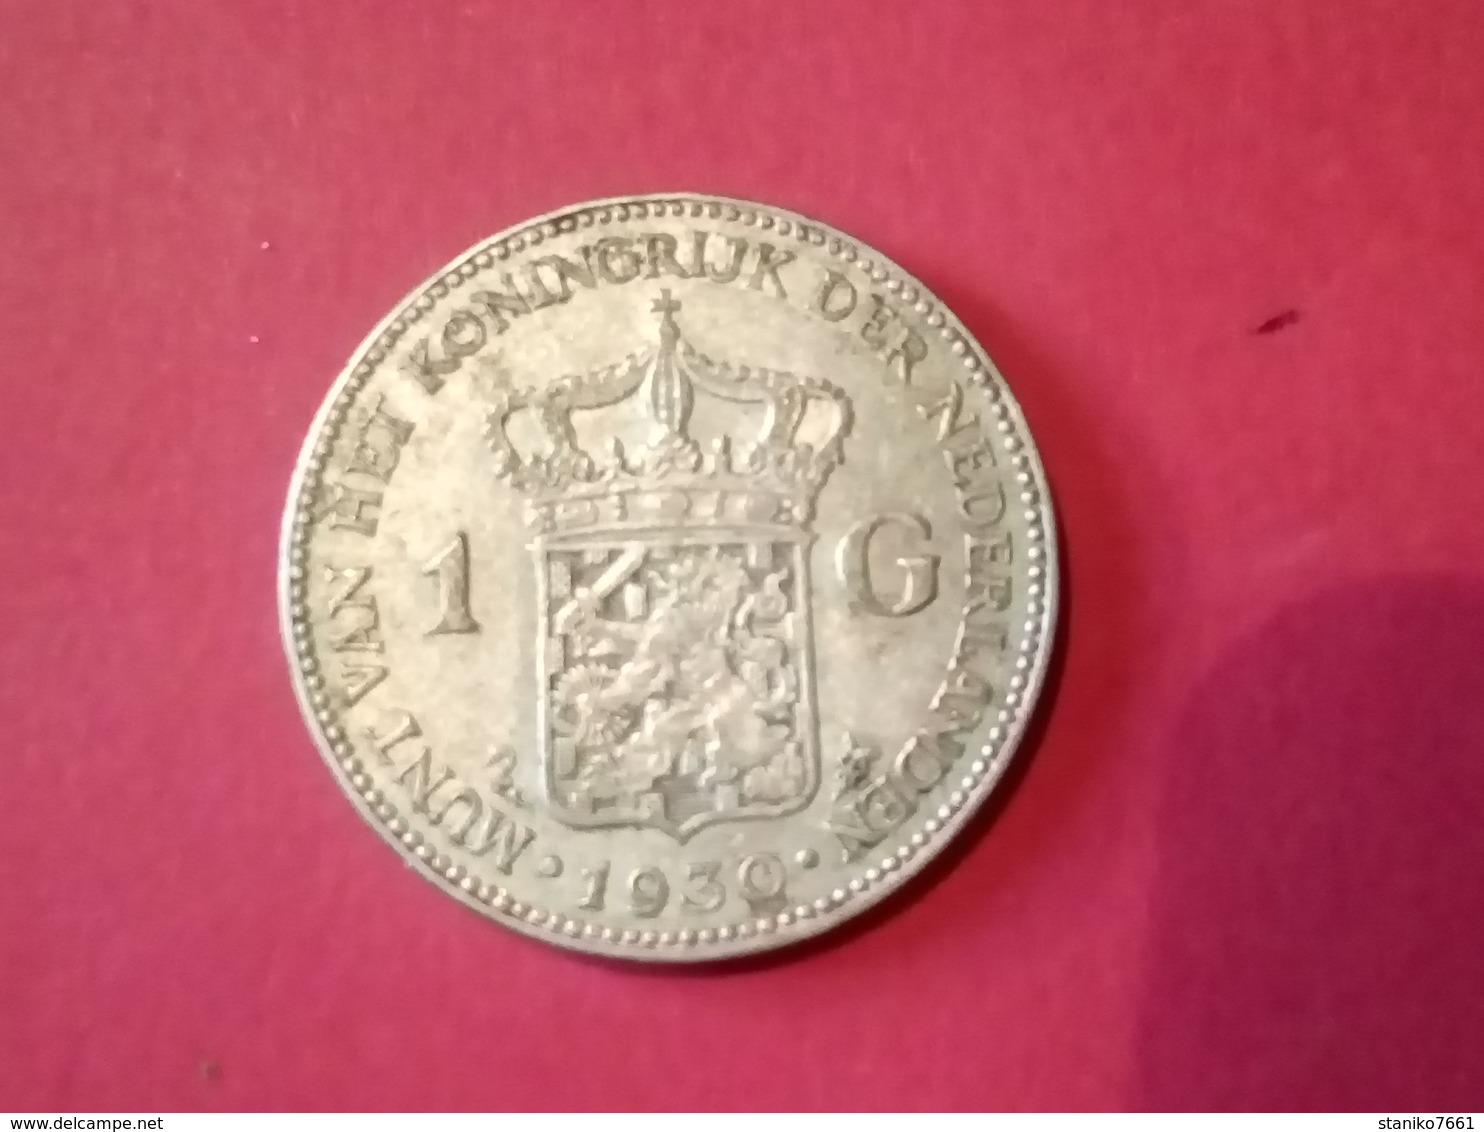 1930 ARGENT Netherlands 1 Gulden - Royaux / De Noblesse